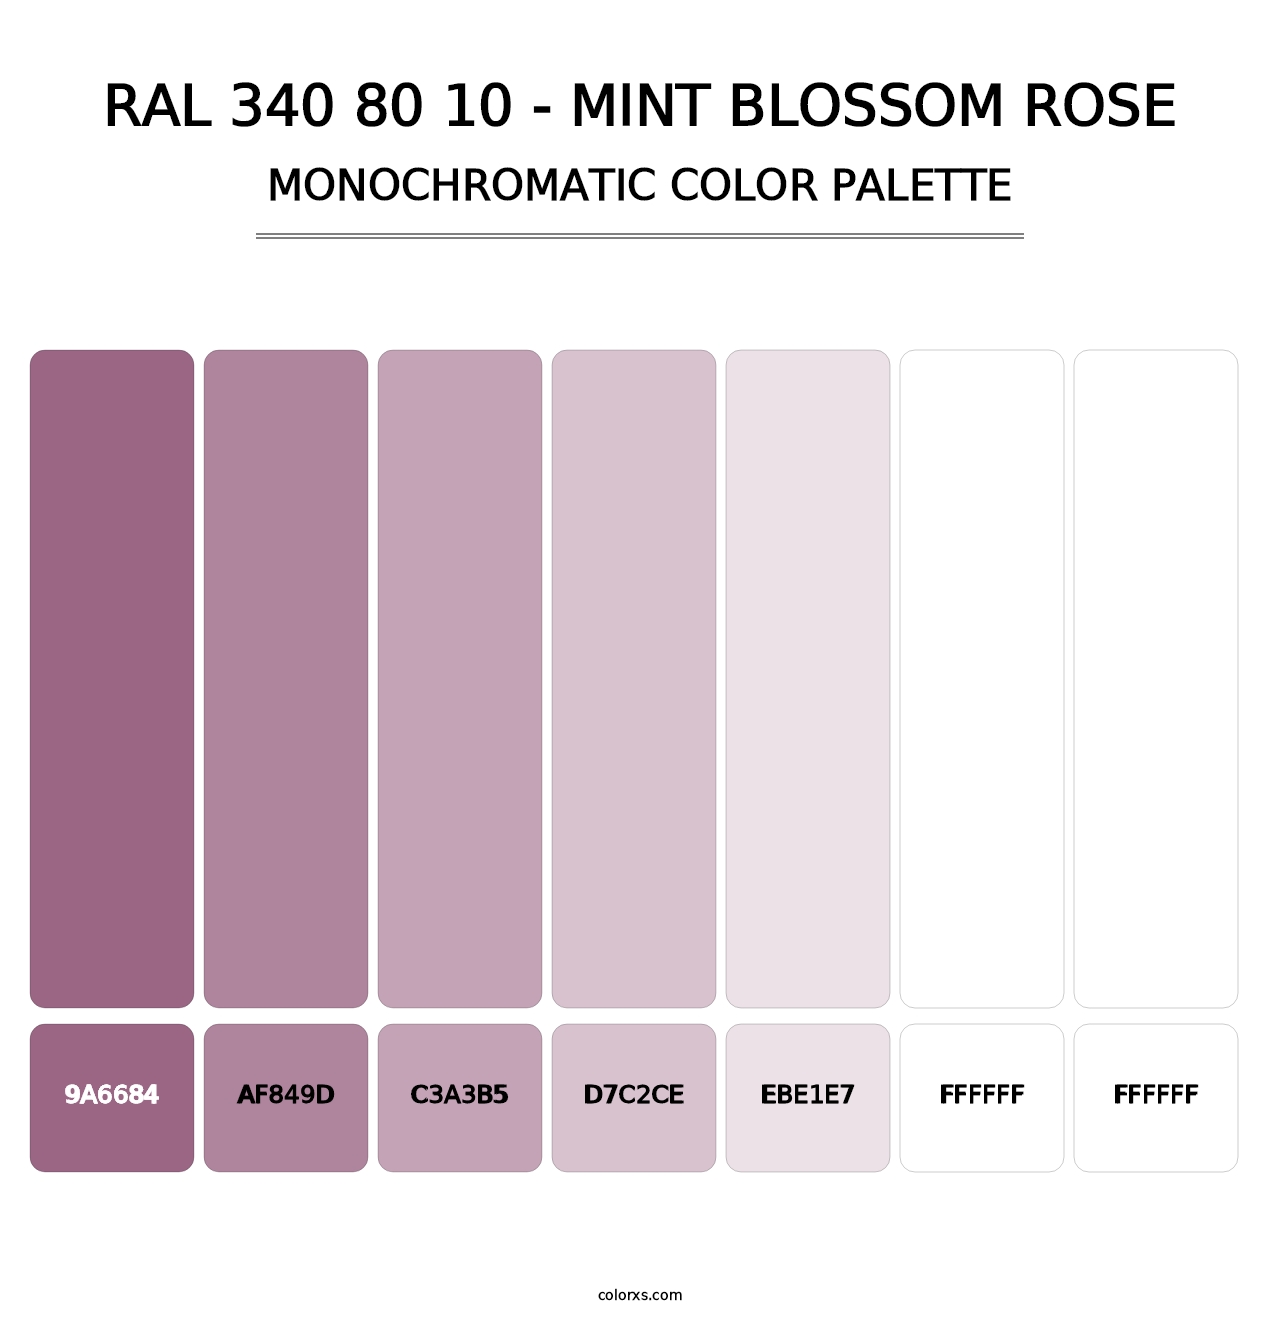 RAL 340 80 10 - Mint Blossom Rose - Monochromatic Color Palette